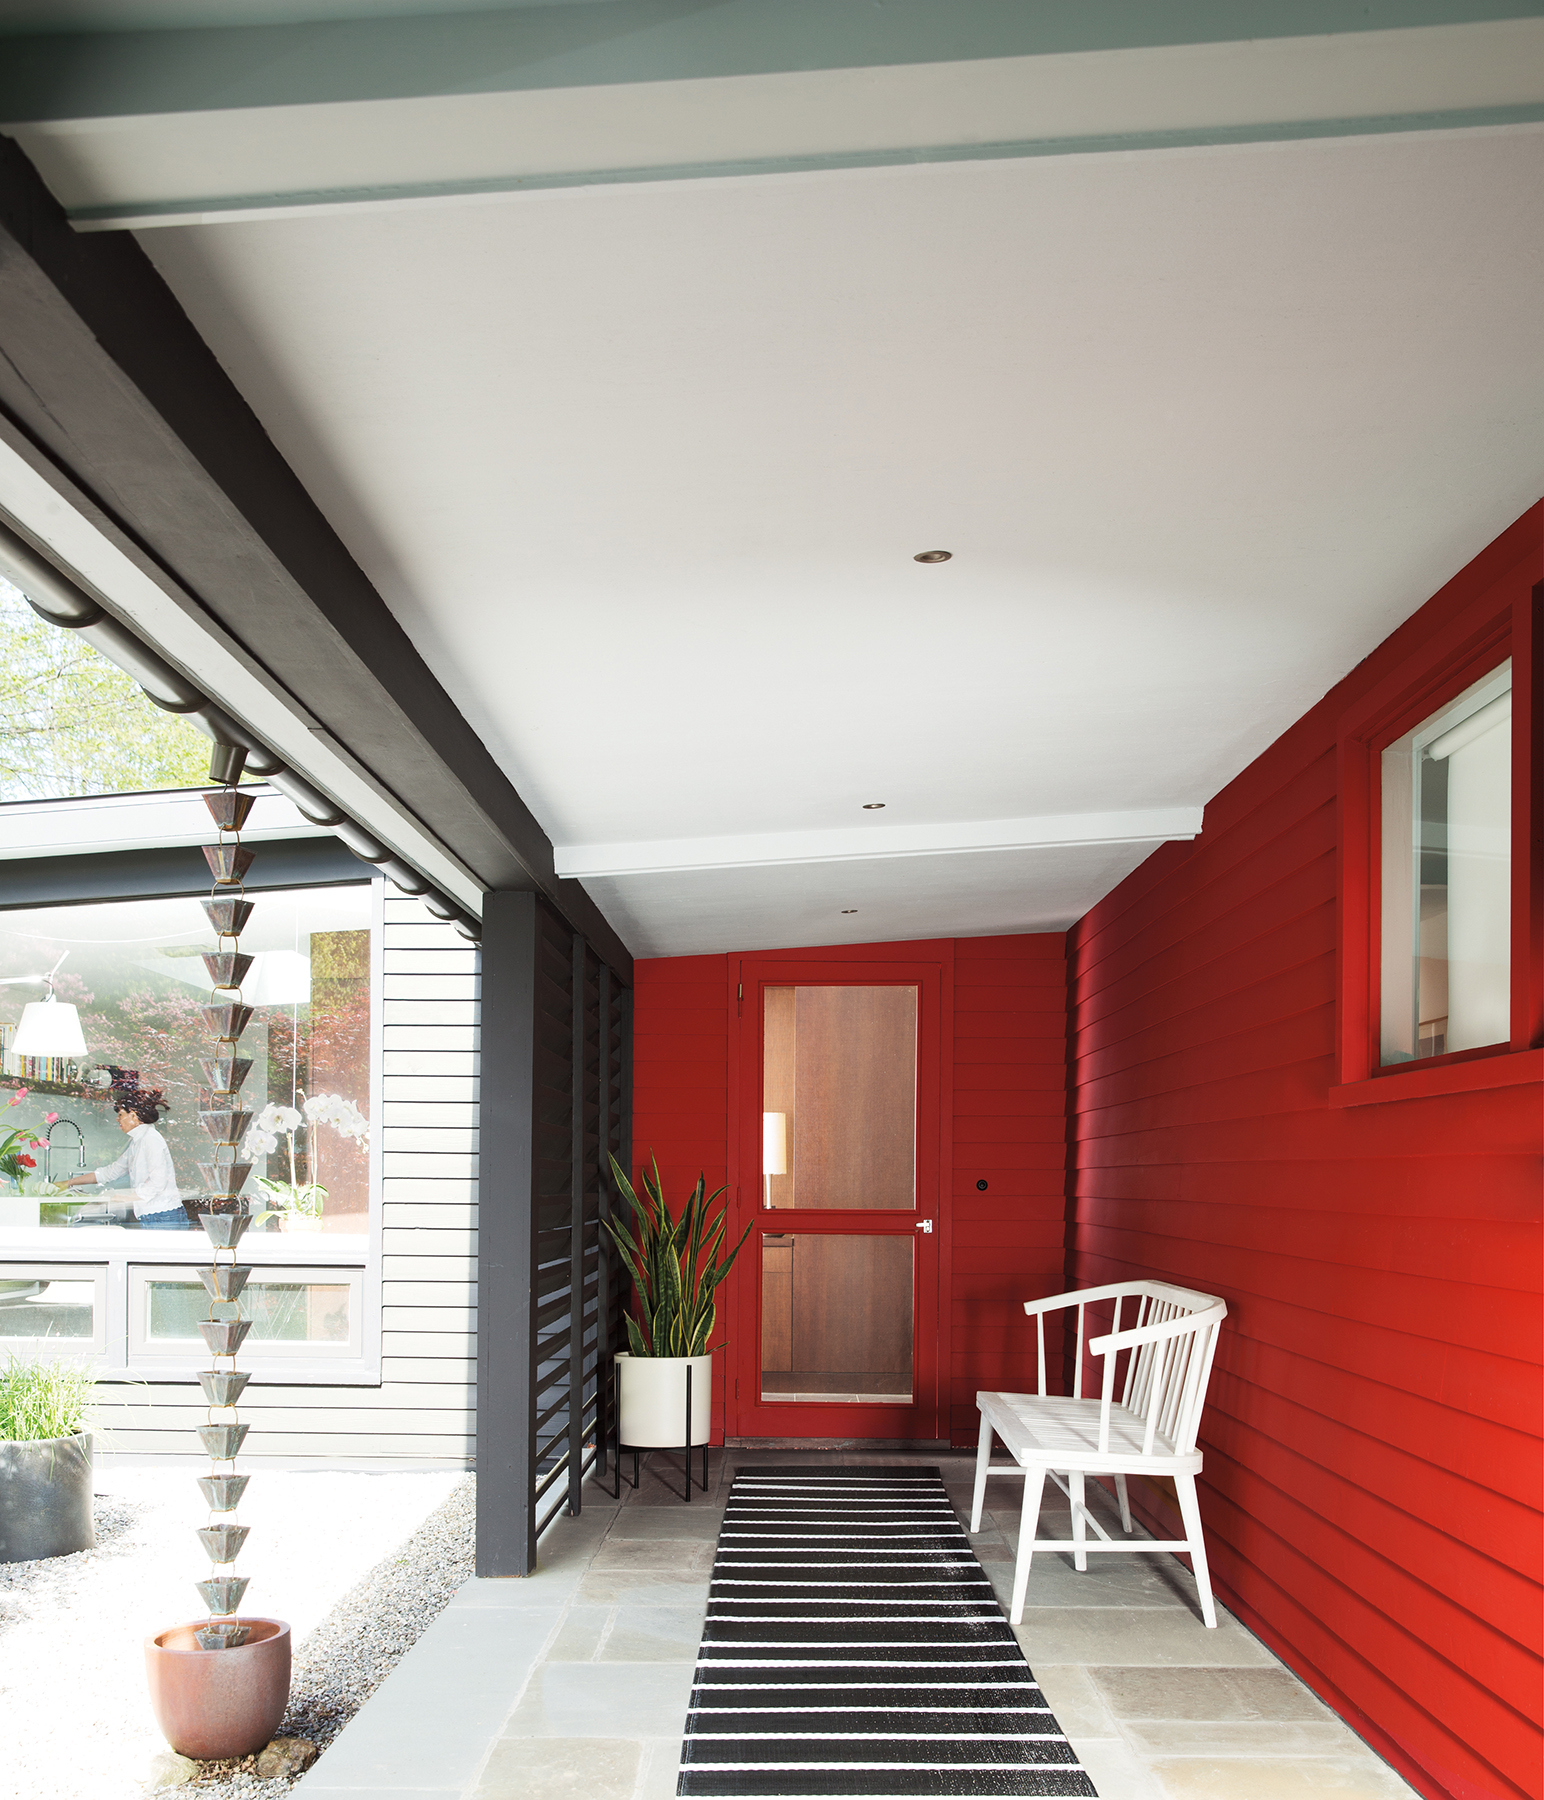 Red exterior siding of home